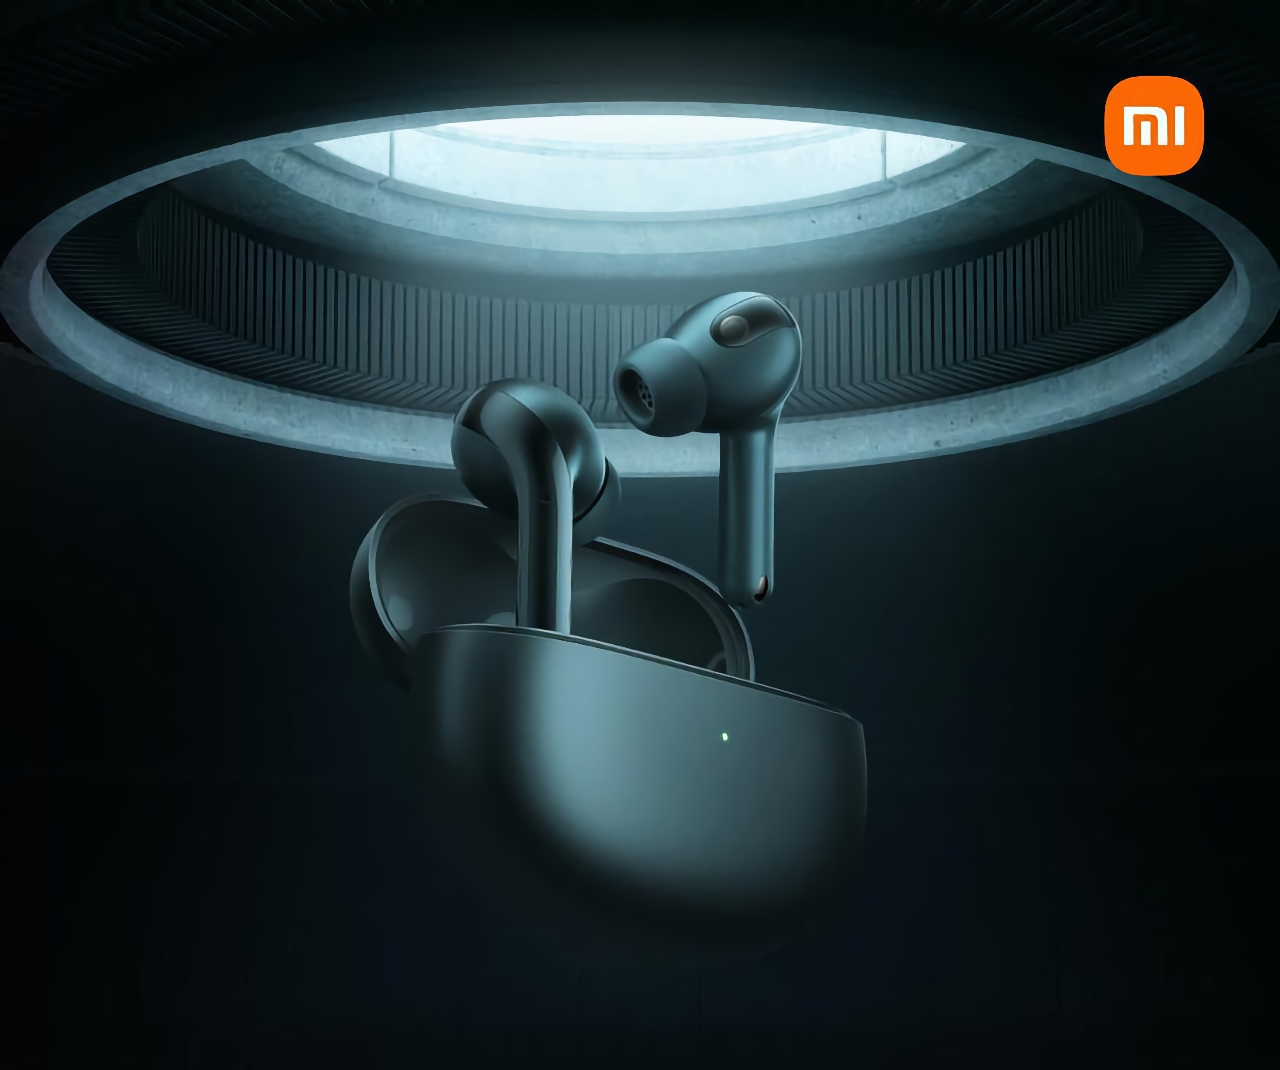 Xiaomi Mi True Wireless Earphones 3 Pro will get spatial audio feature like AirPods Pro